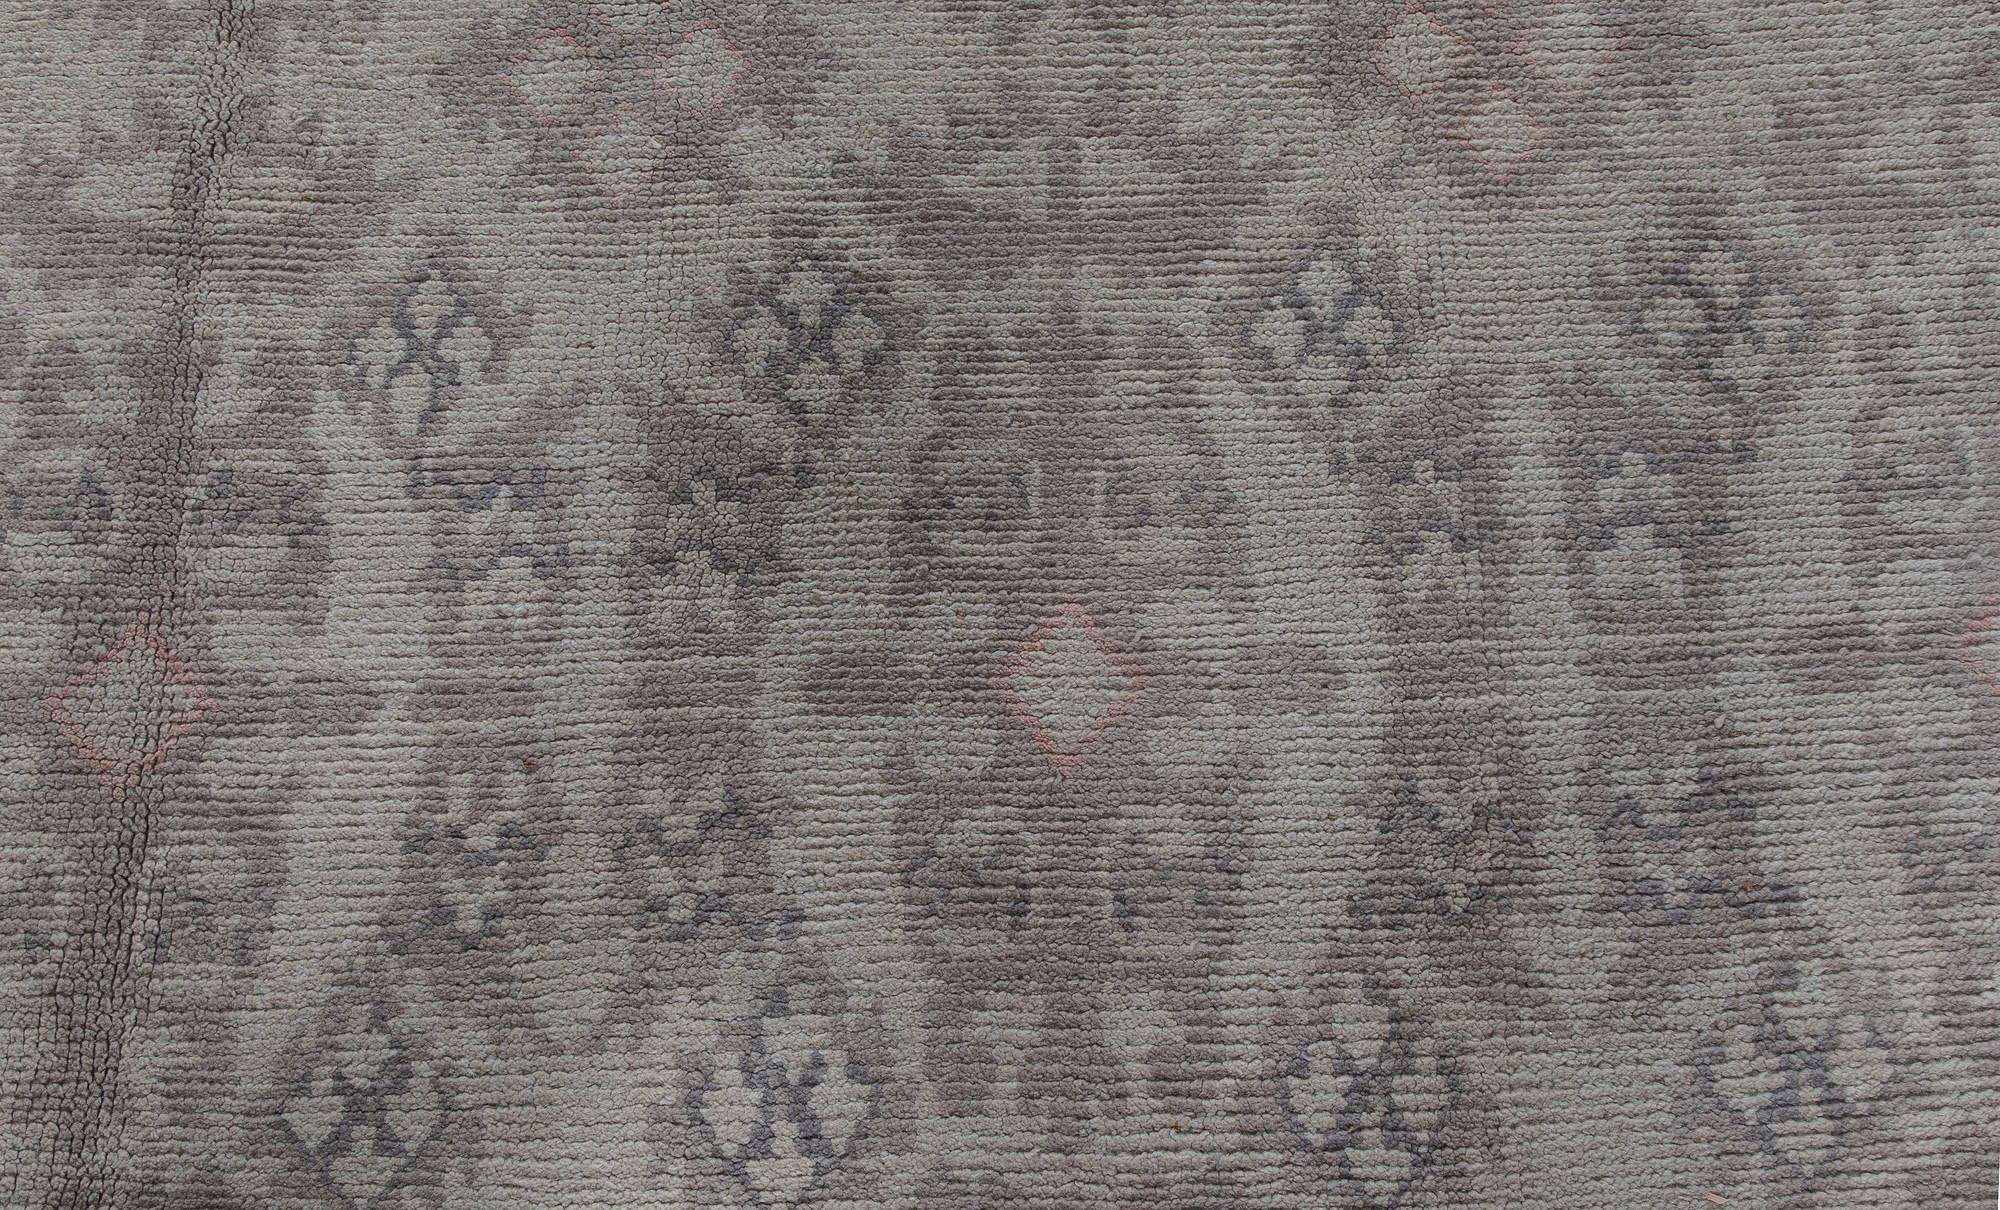 High-quality Vintage Spanish beige handmade wool rug
Size: 13'8